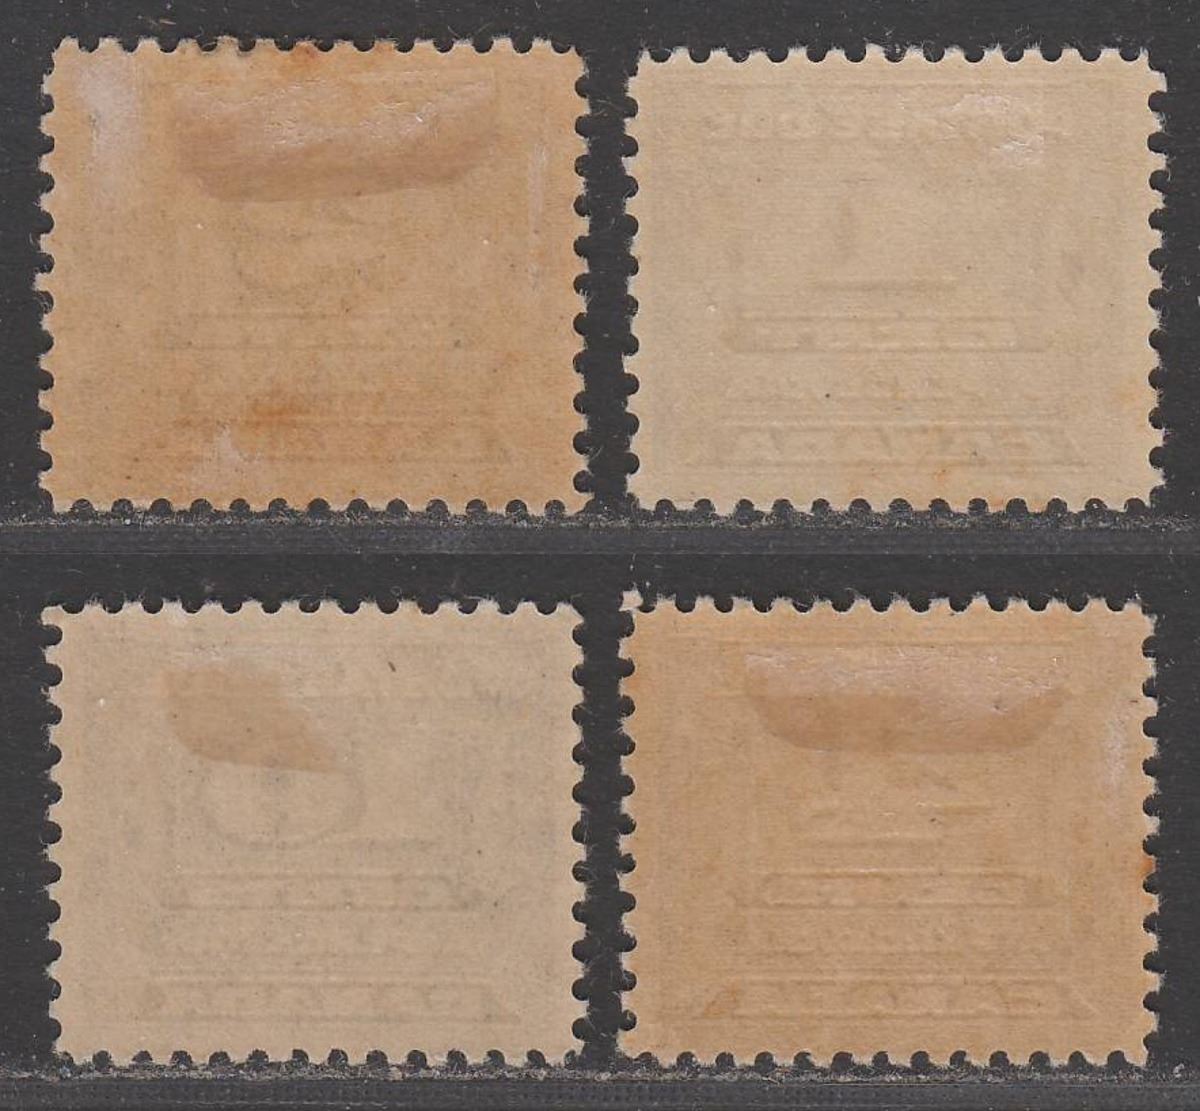 Canada 1933 King George V Postage Due Set Mint SG D14-17 cat £60